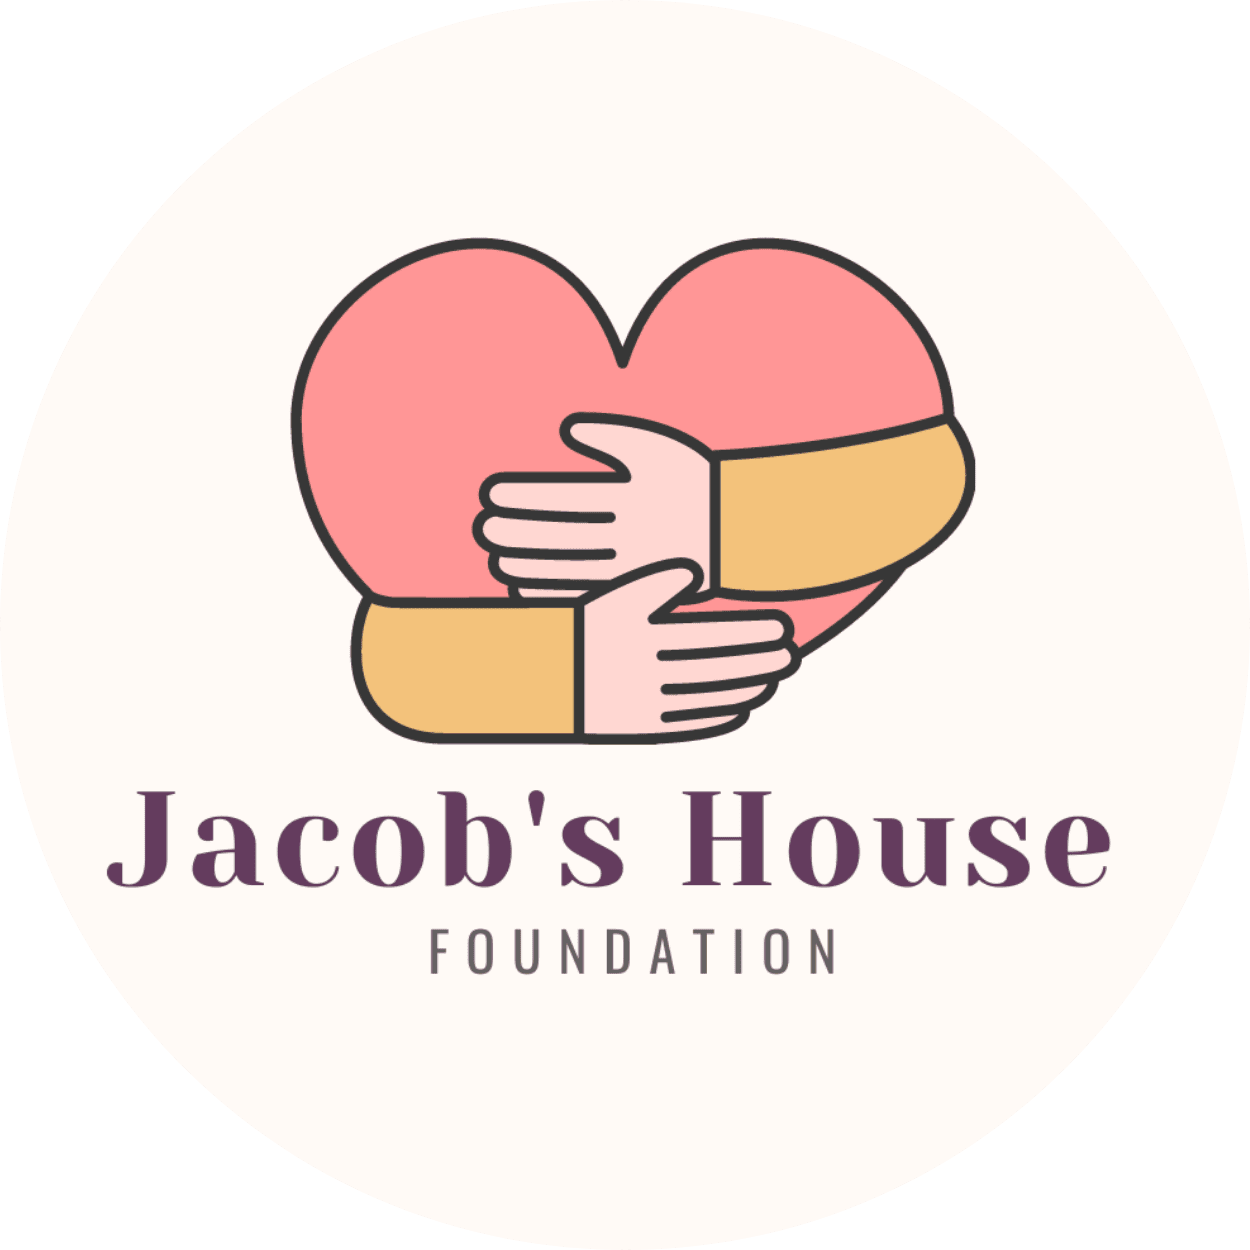 Jacob's House Foundation